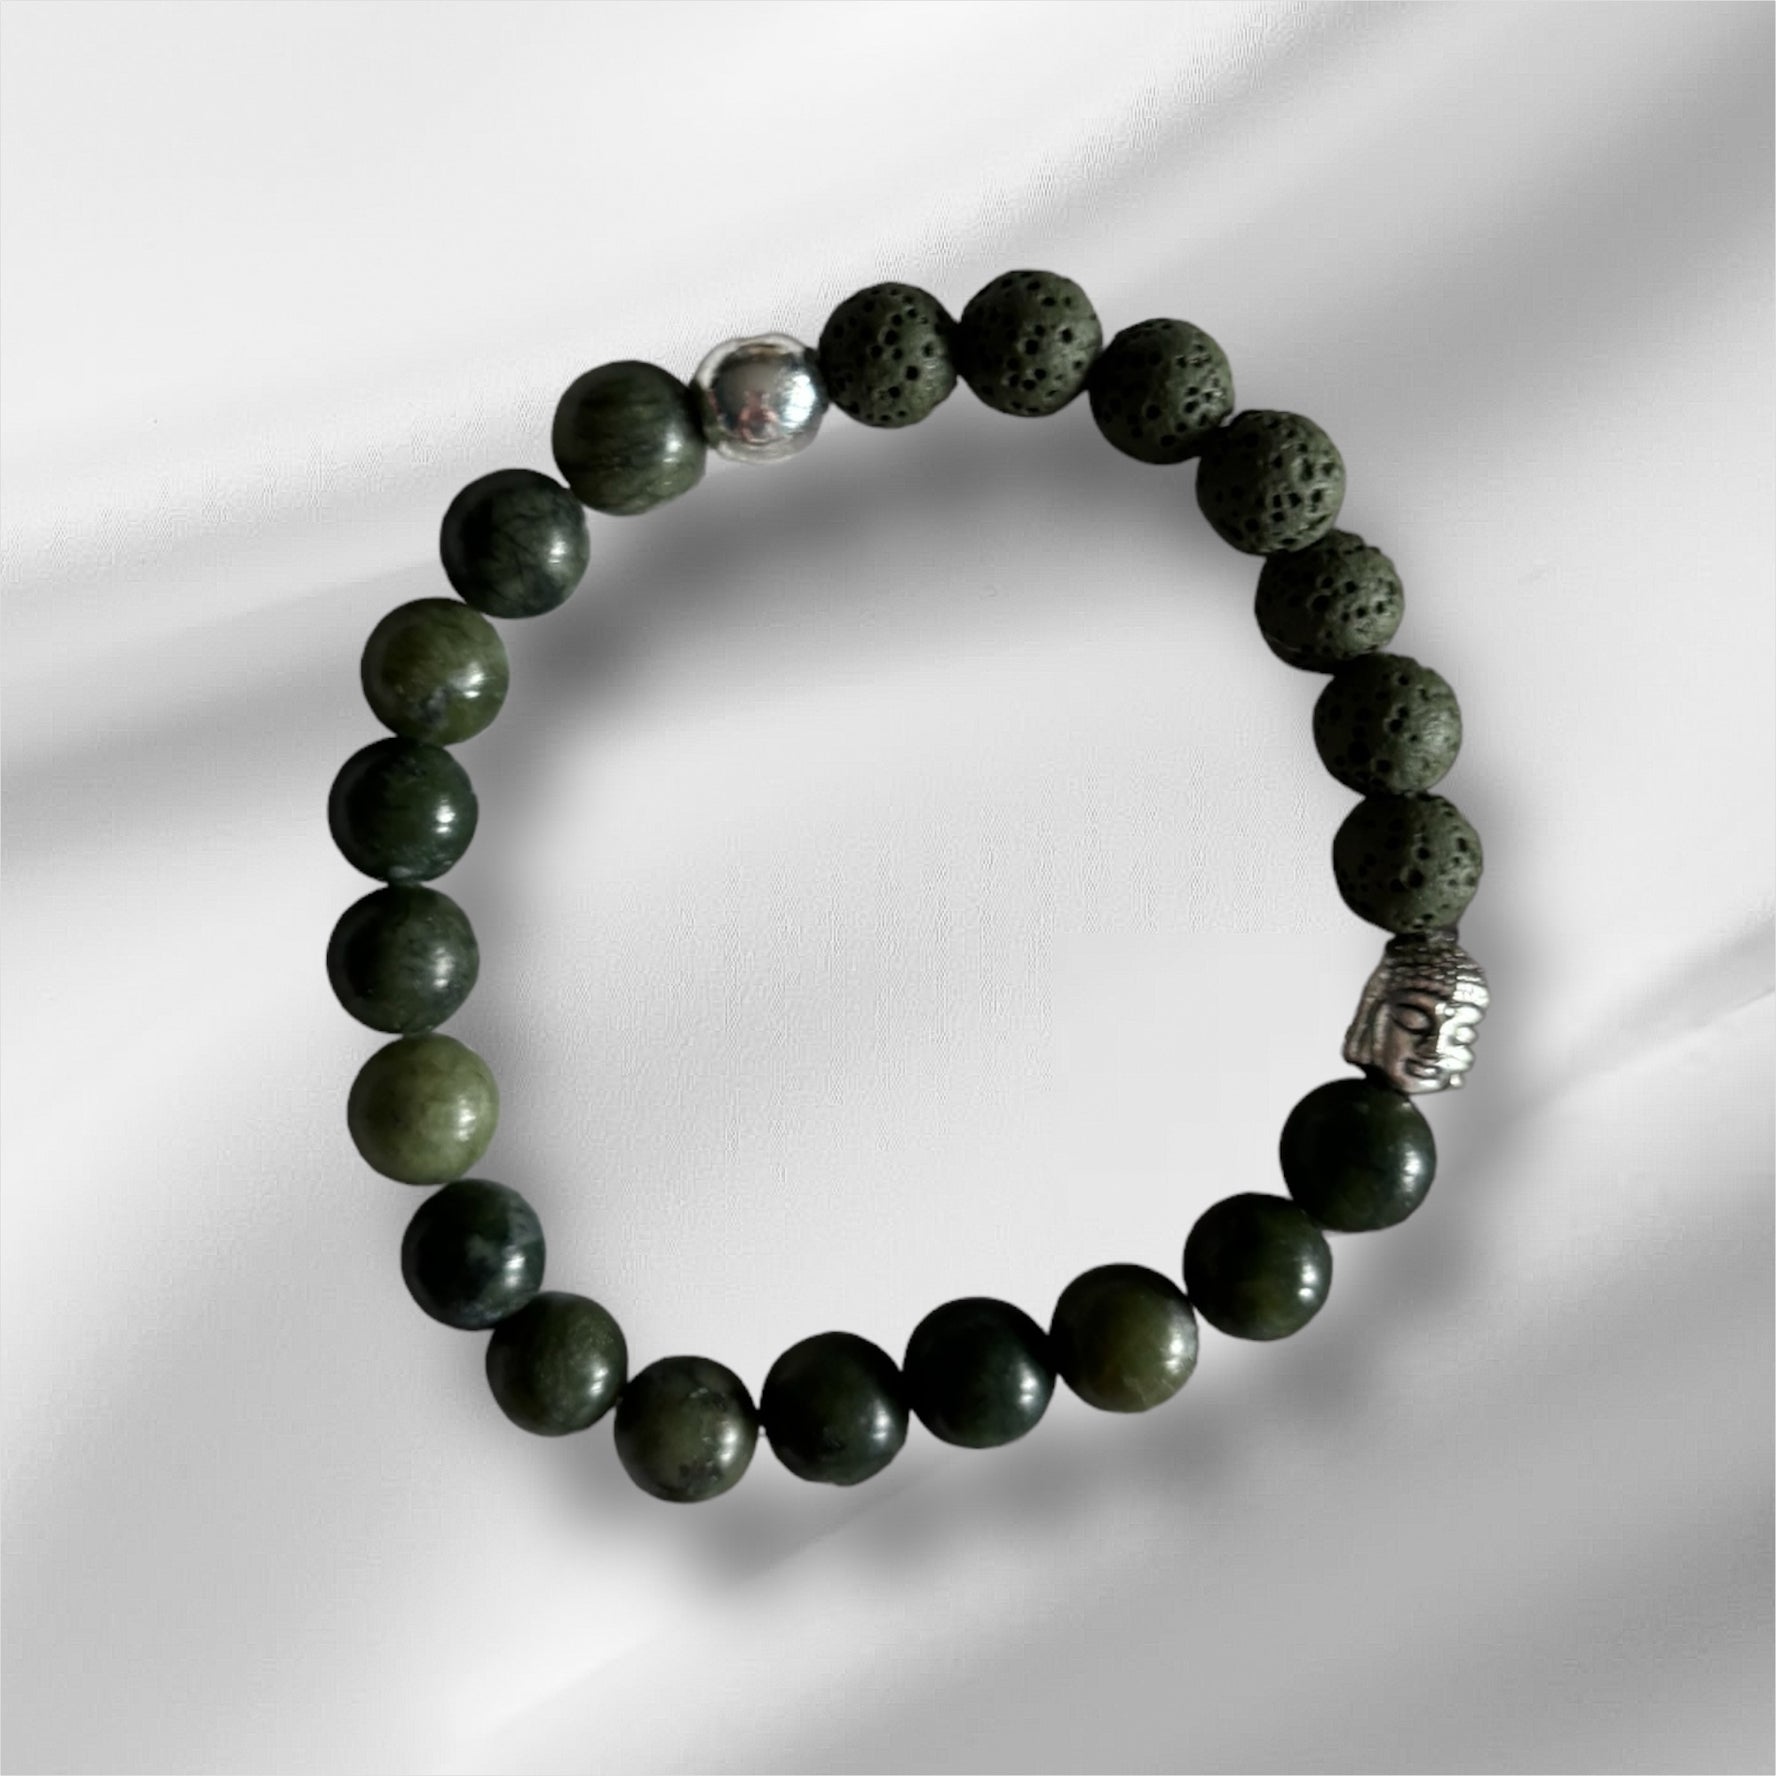 Bracelet artisanal de la collection "Jade"